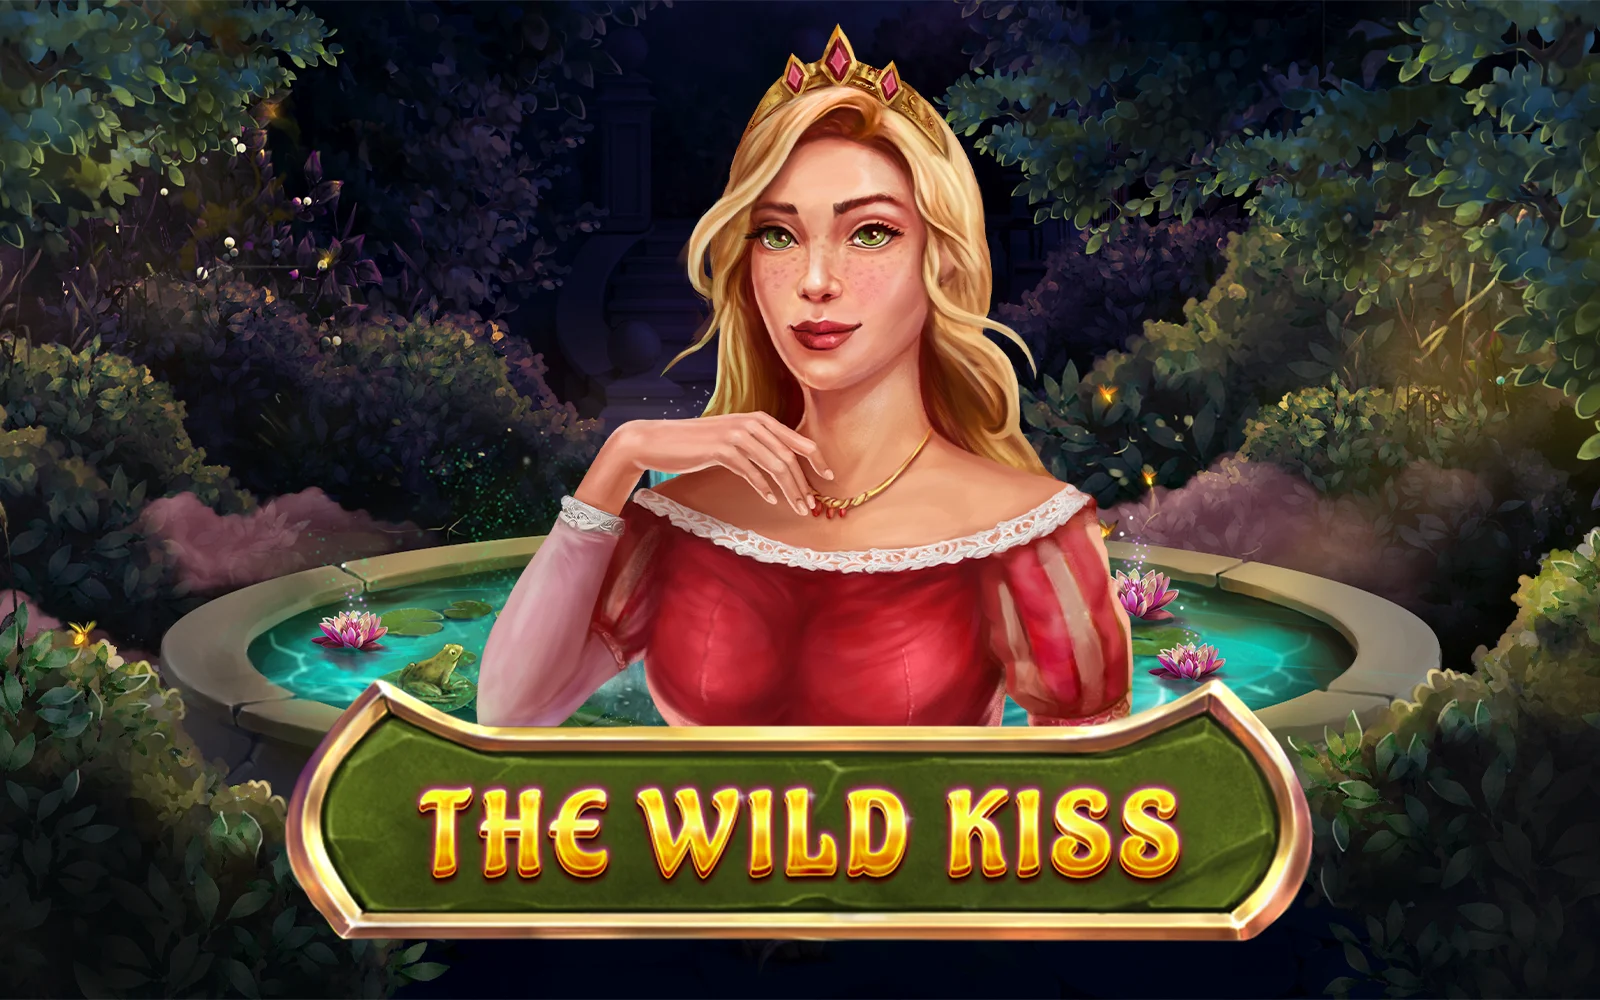 Joacă The Wild Kiss în cazinoul online Starcasino.be